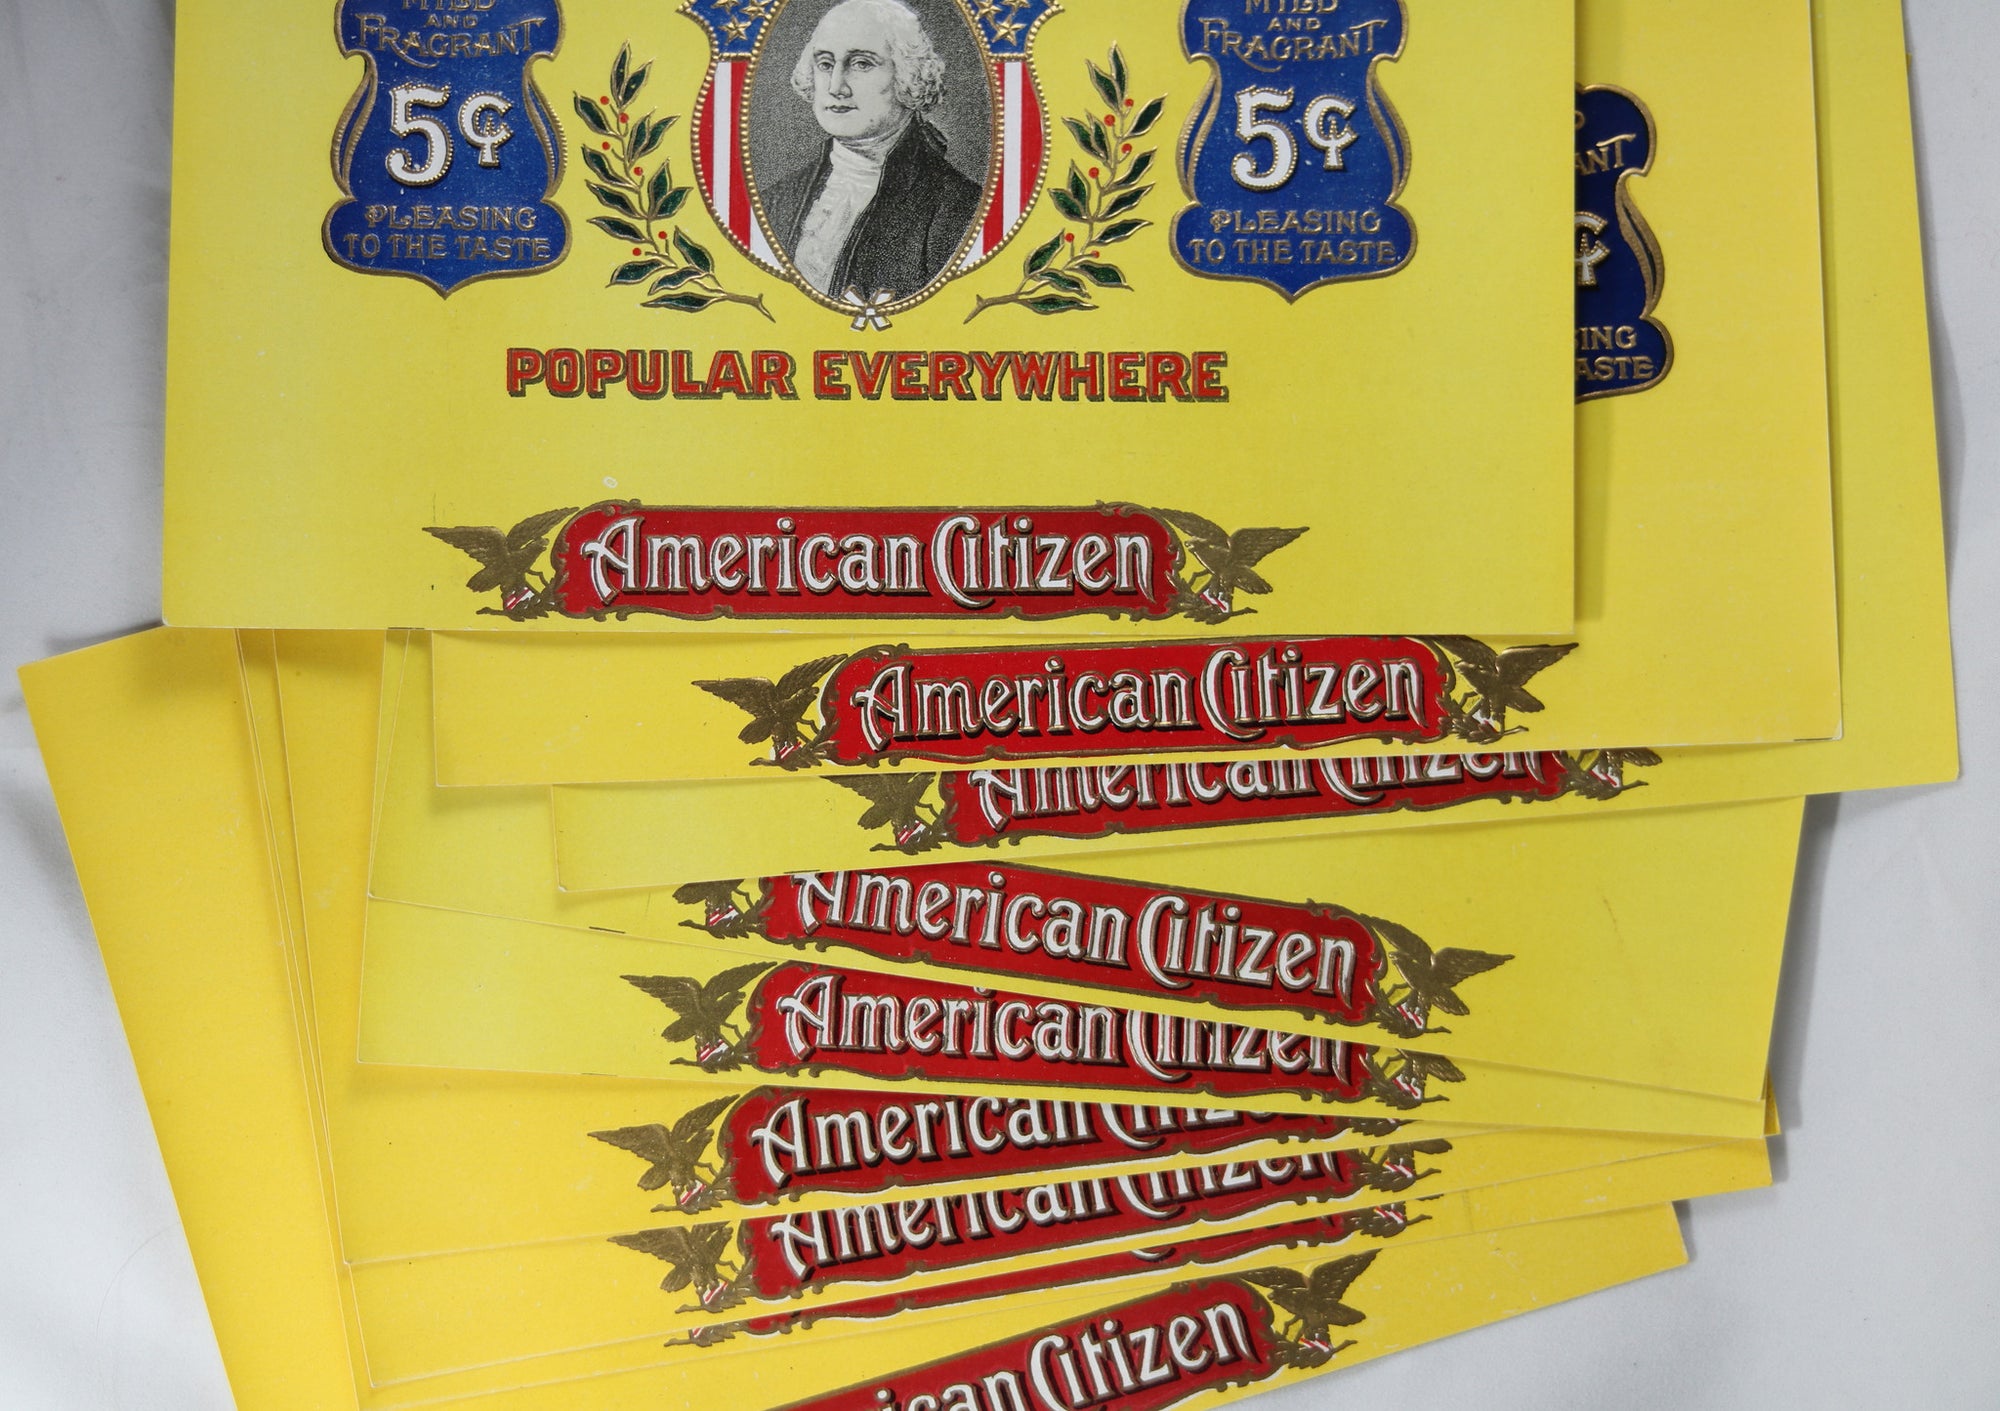 Cigar box inner label ‘Hand Made American Citizen 5¢’ @1920